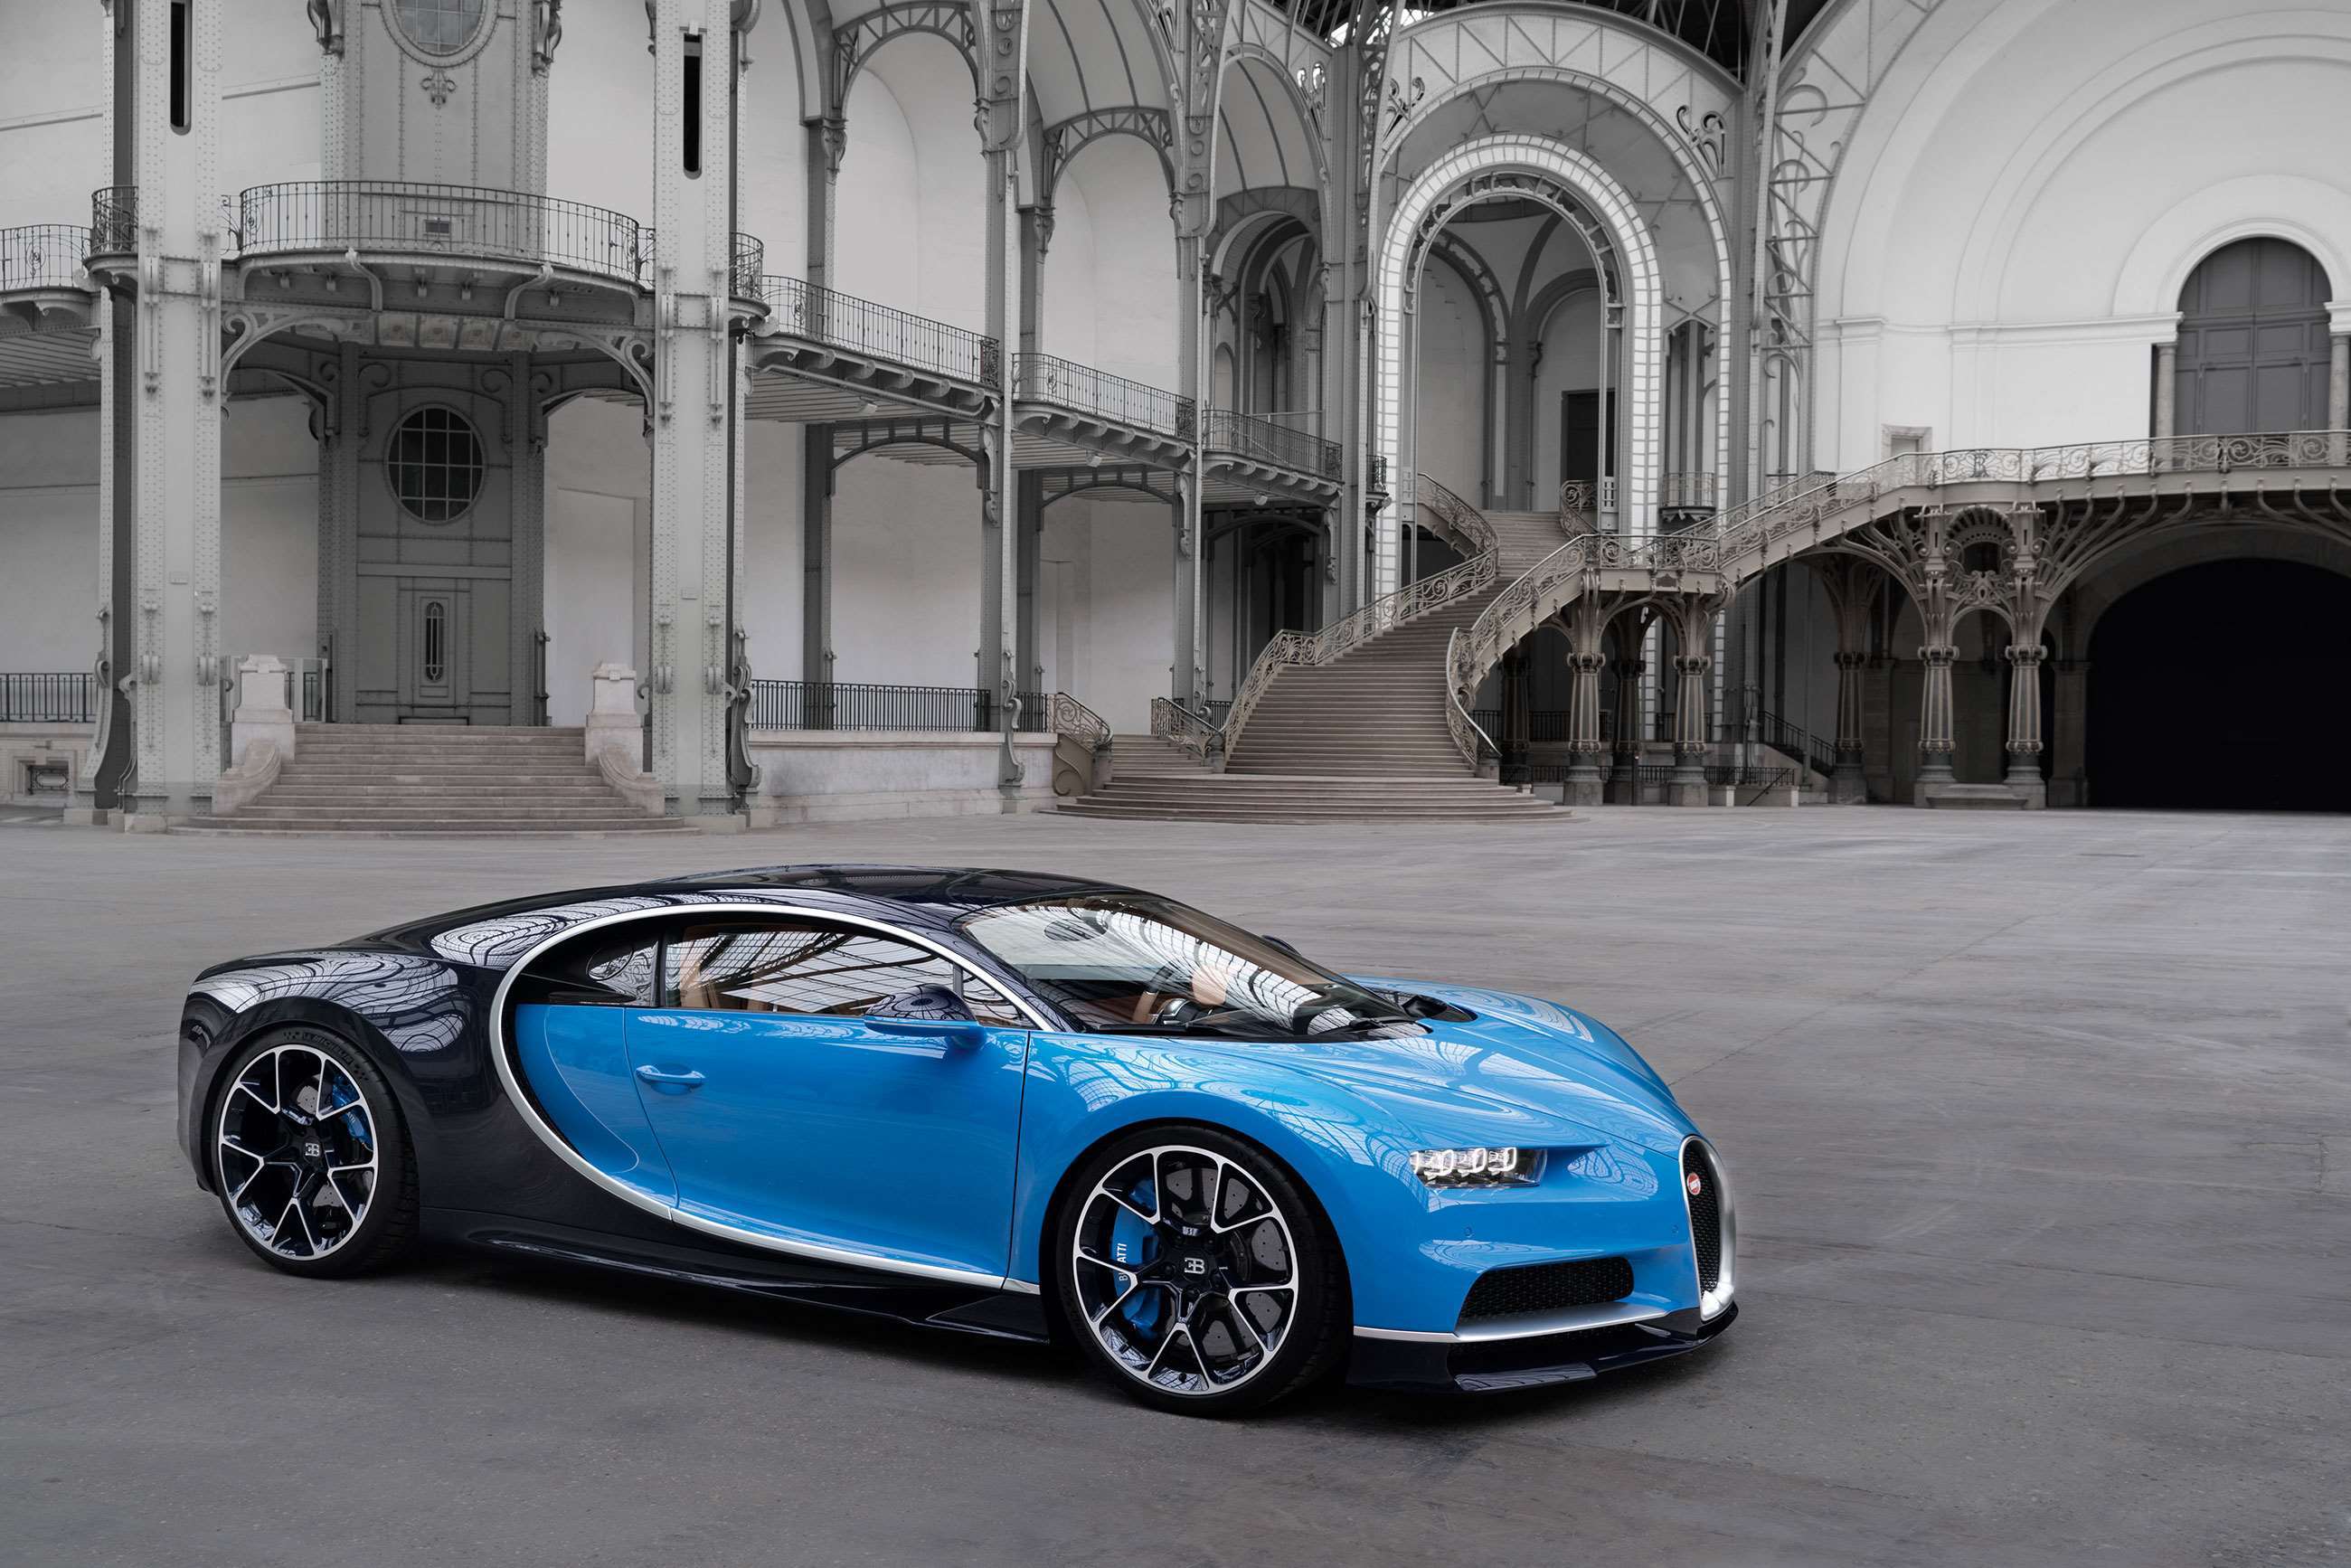 most-powerful-cars-on-sale-5-bugatti-chiron-goodwood-10092020.jpg